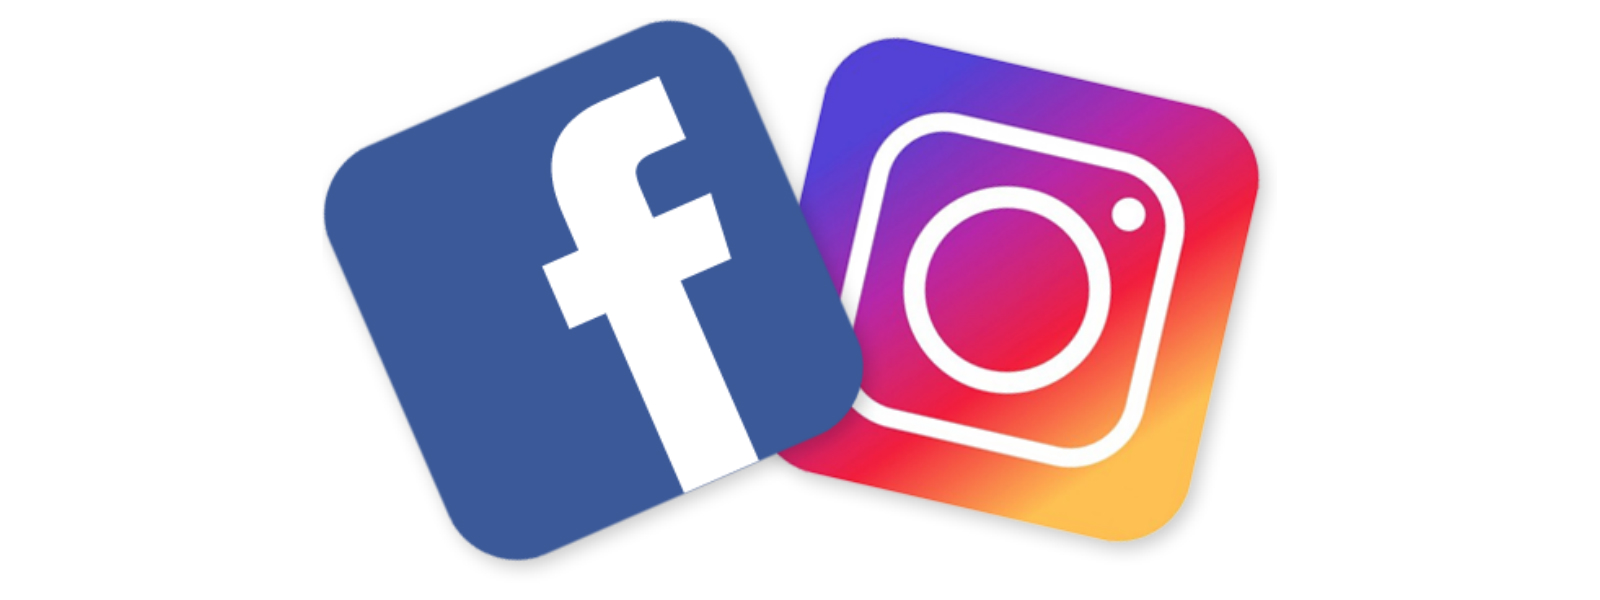 Facebook සහ Instagram බිඳ වැටෙයි